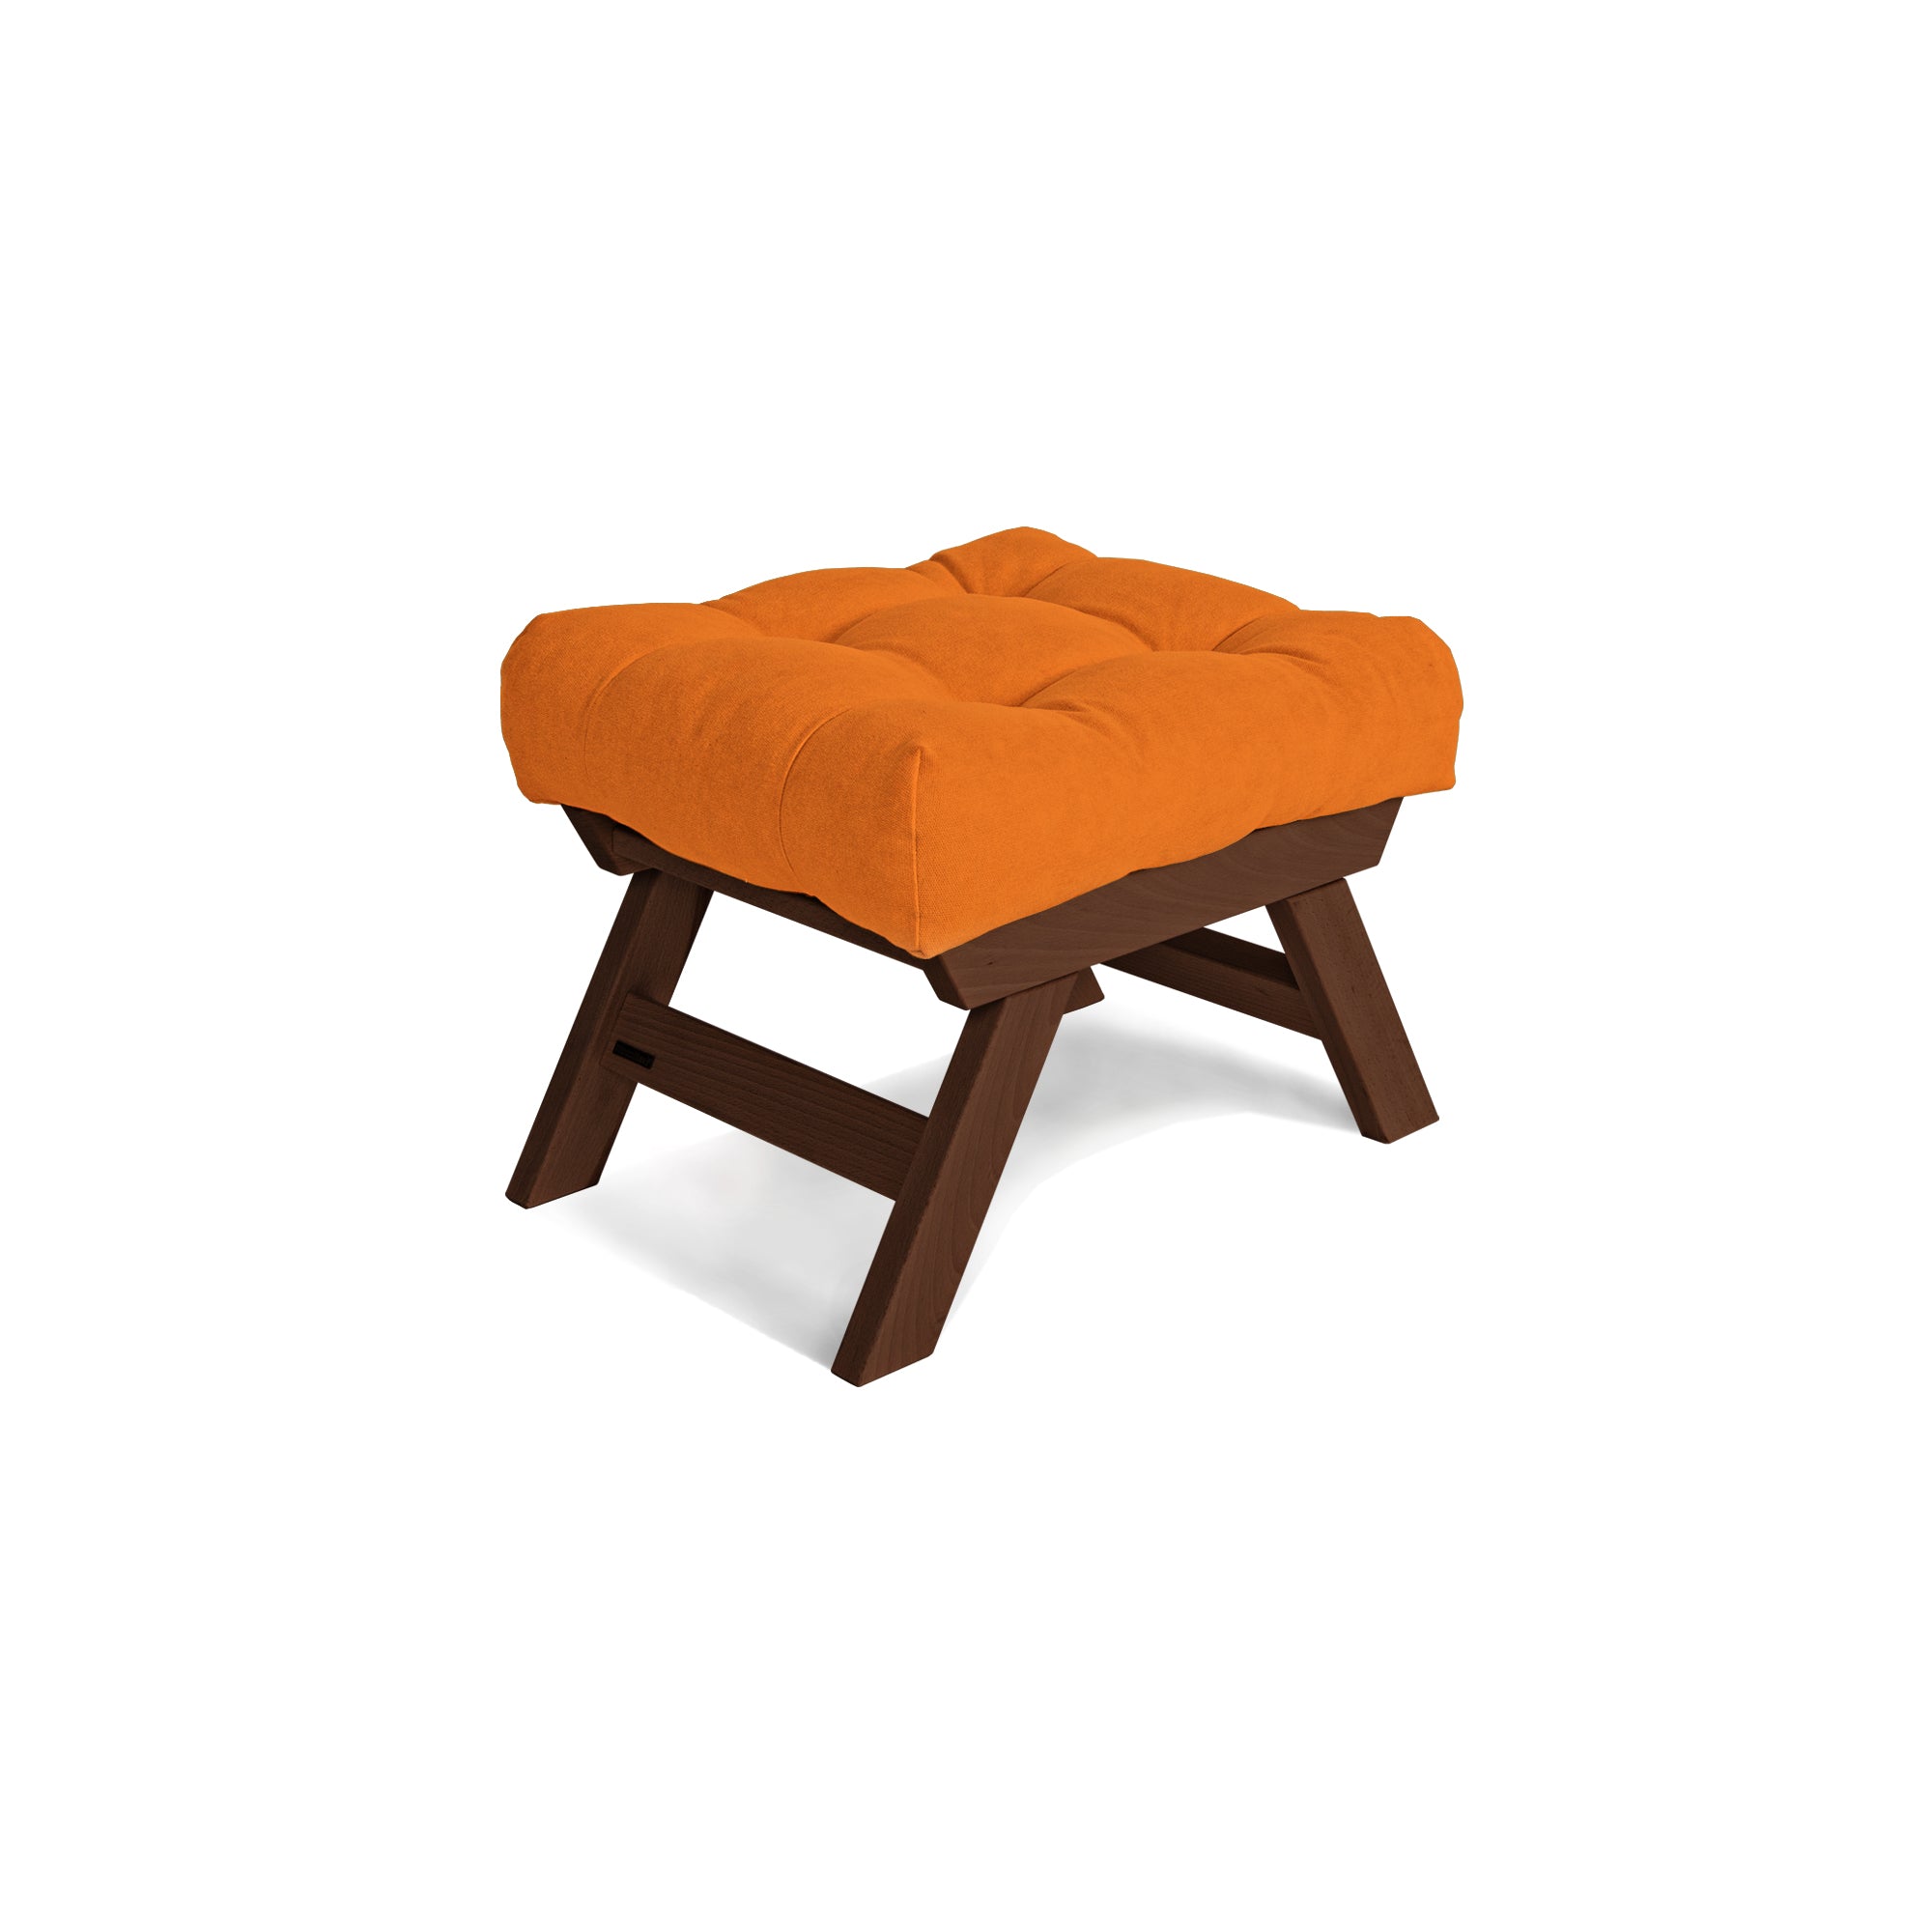 ALLEGRO Pouffe, Walnut Wood upholstery colour orange